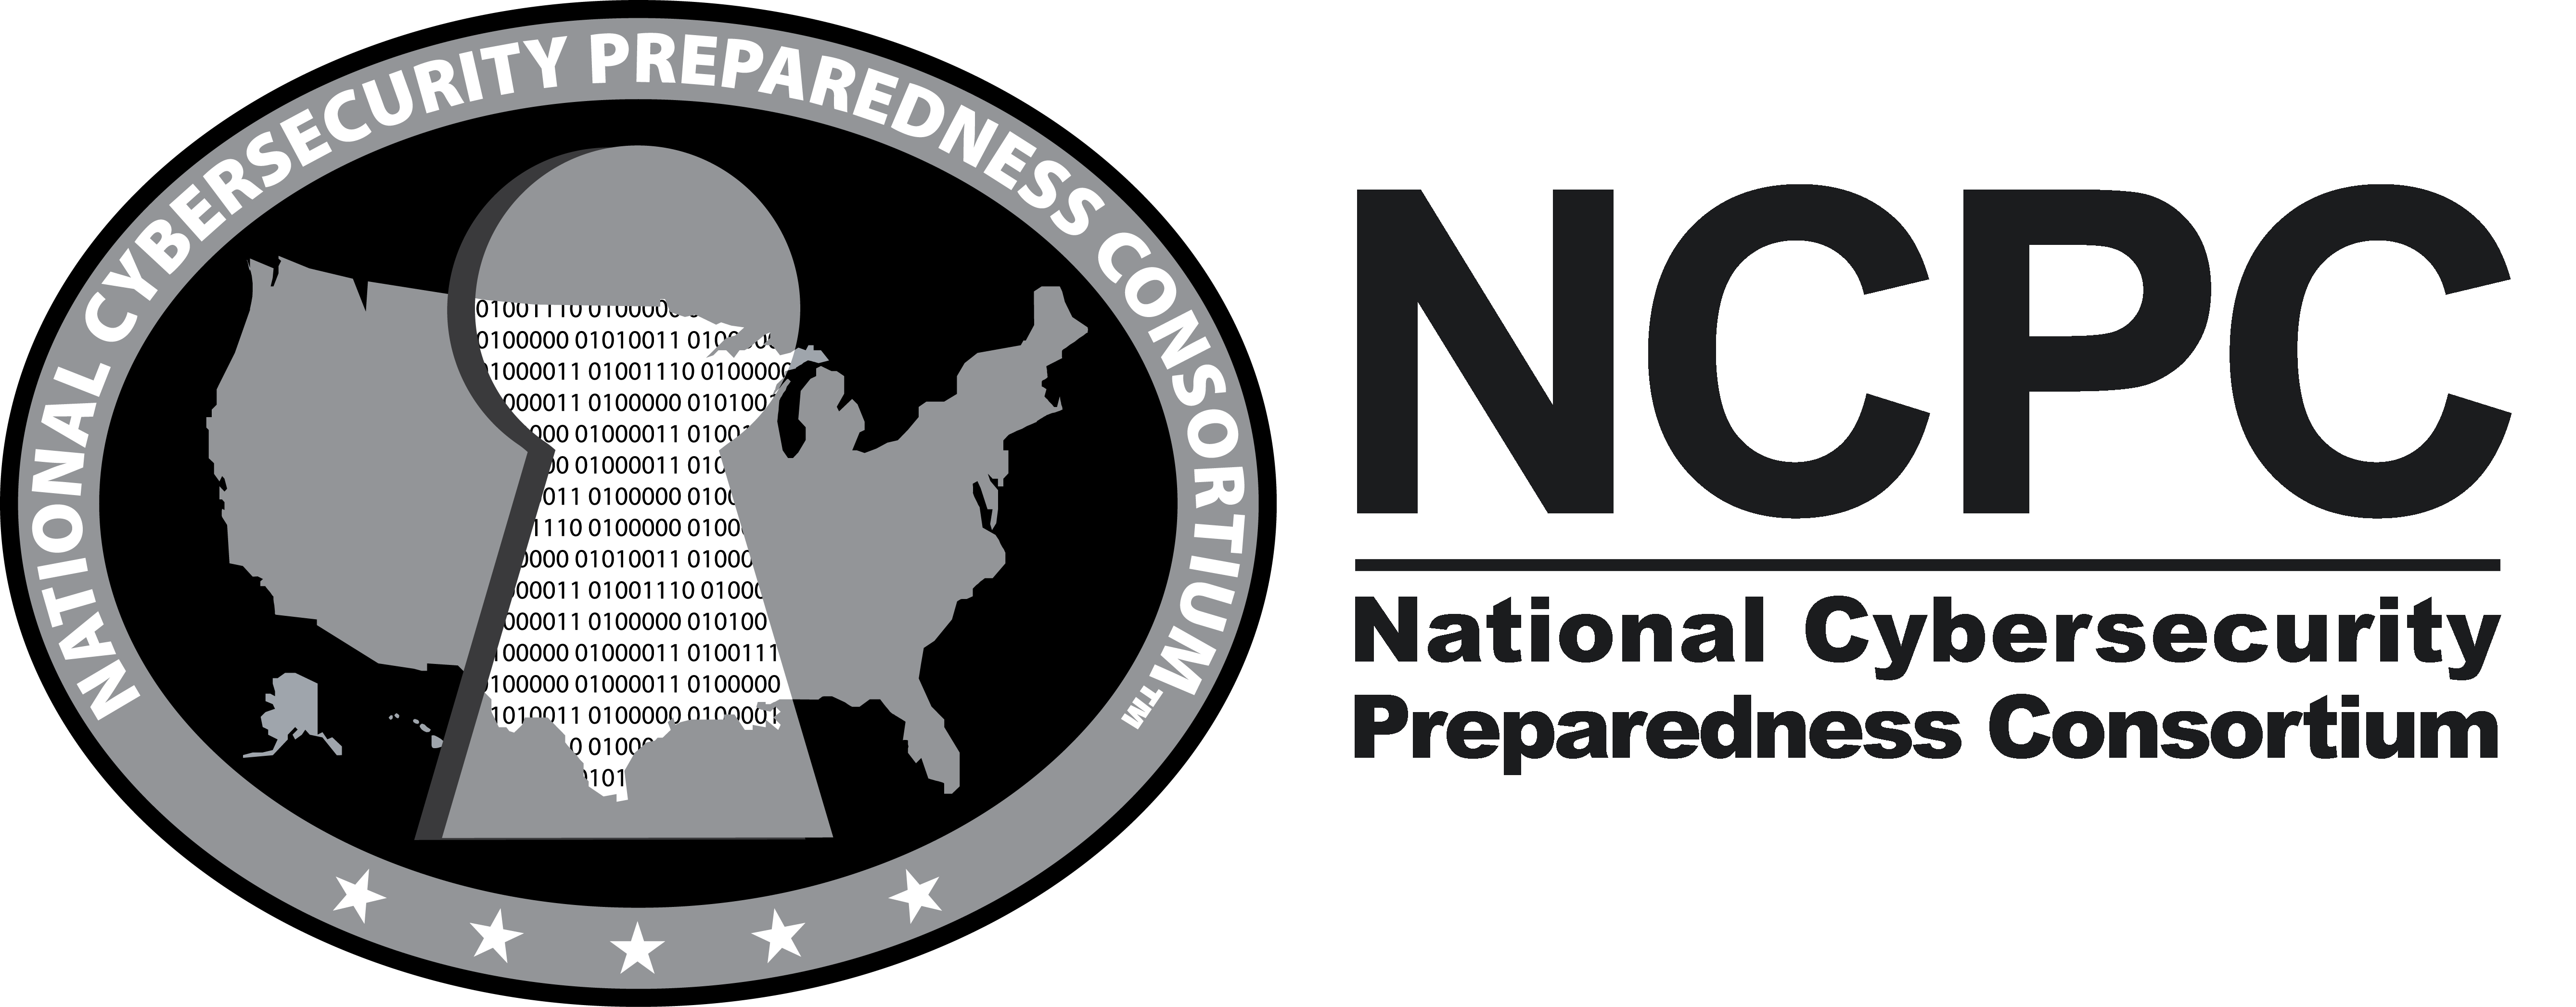 National Cybersecurity Preparedness Consortium Logo